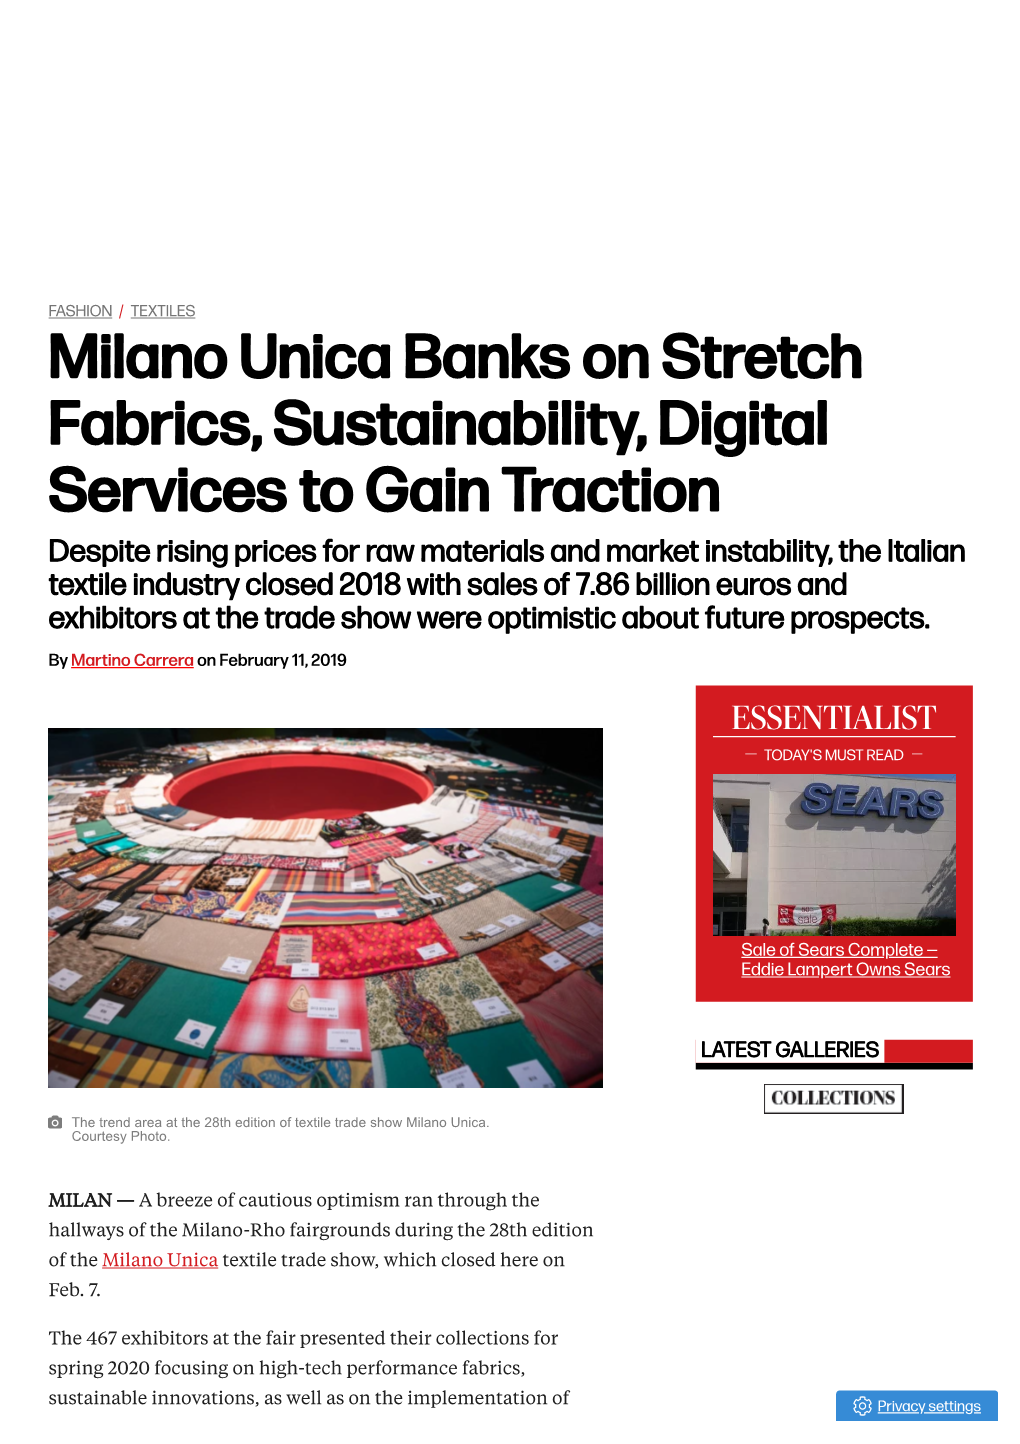 Milano Unica Banks on Stretch Fabrics, Sustainability, Digital